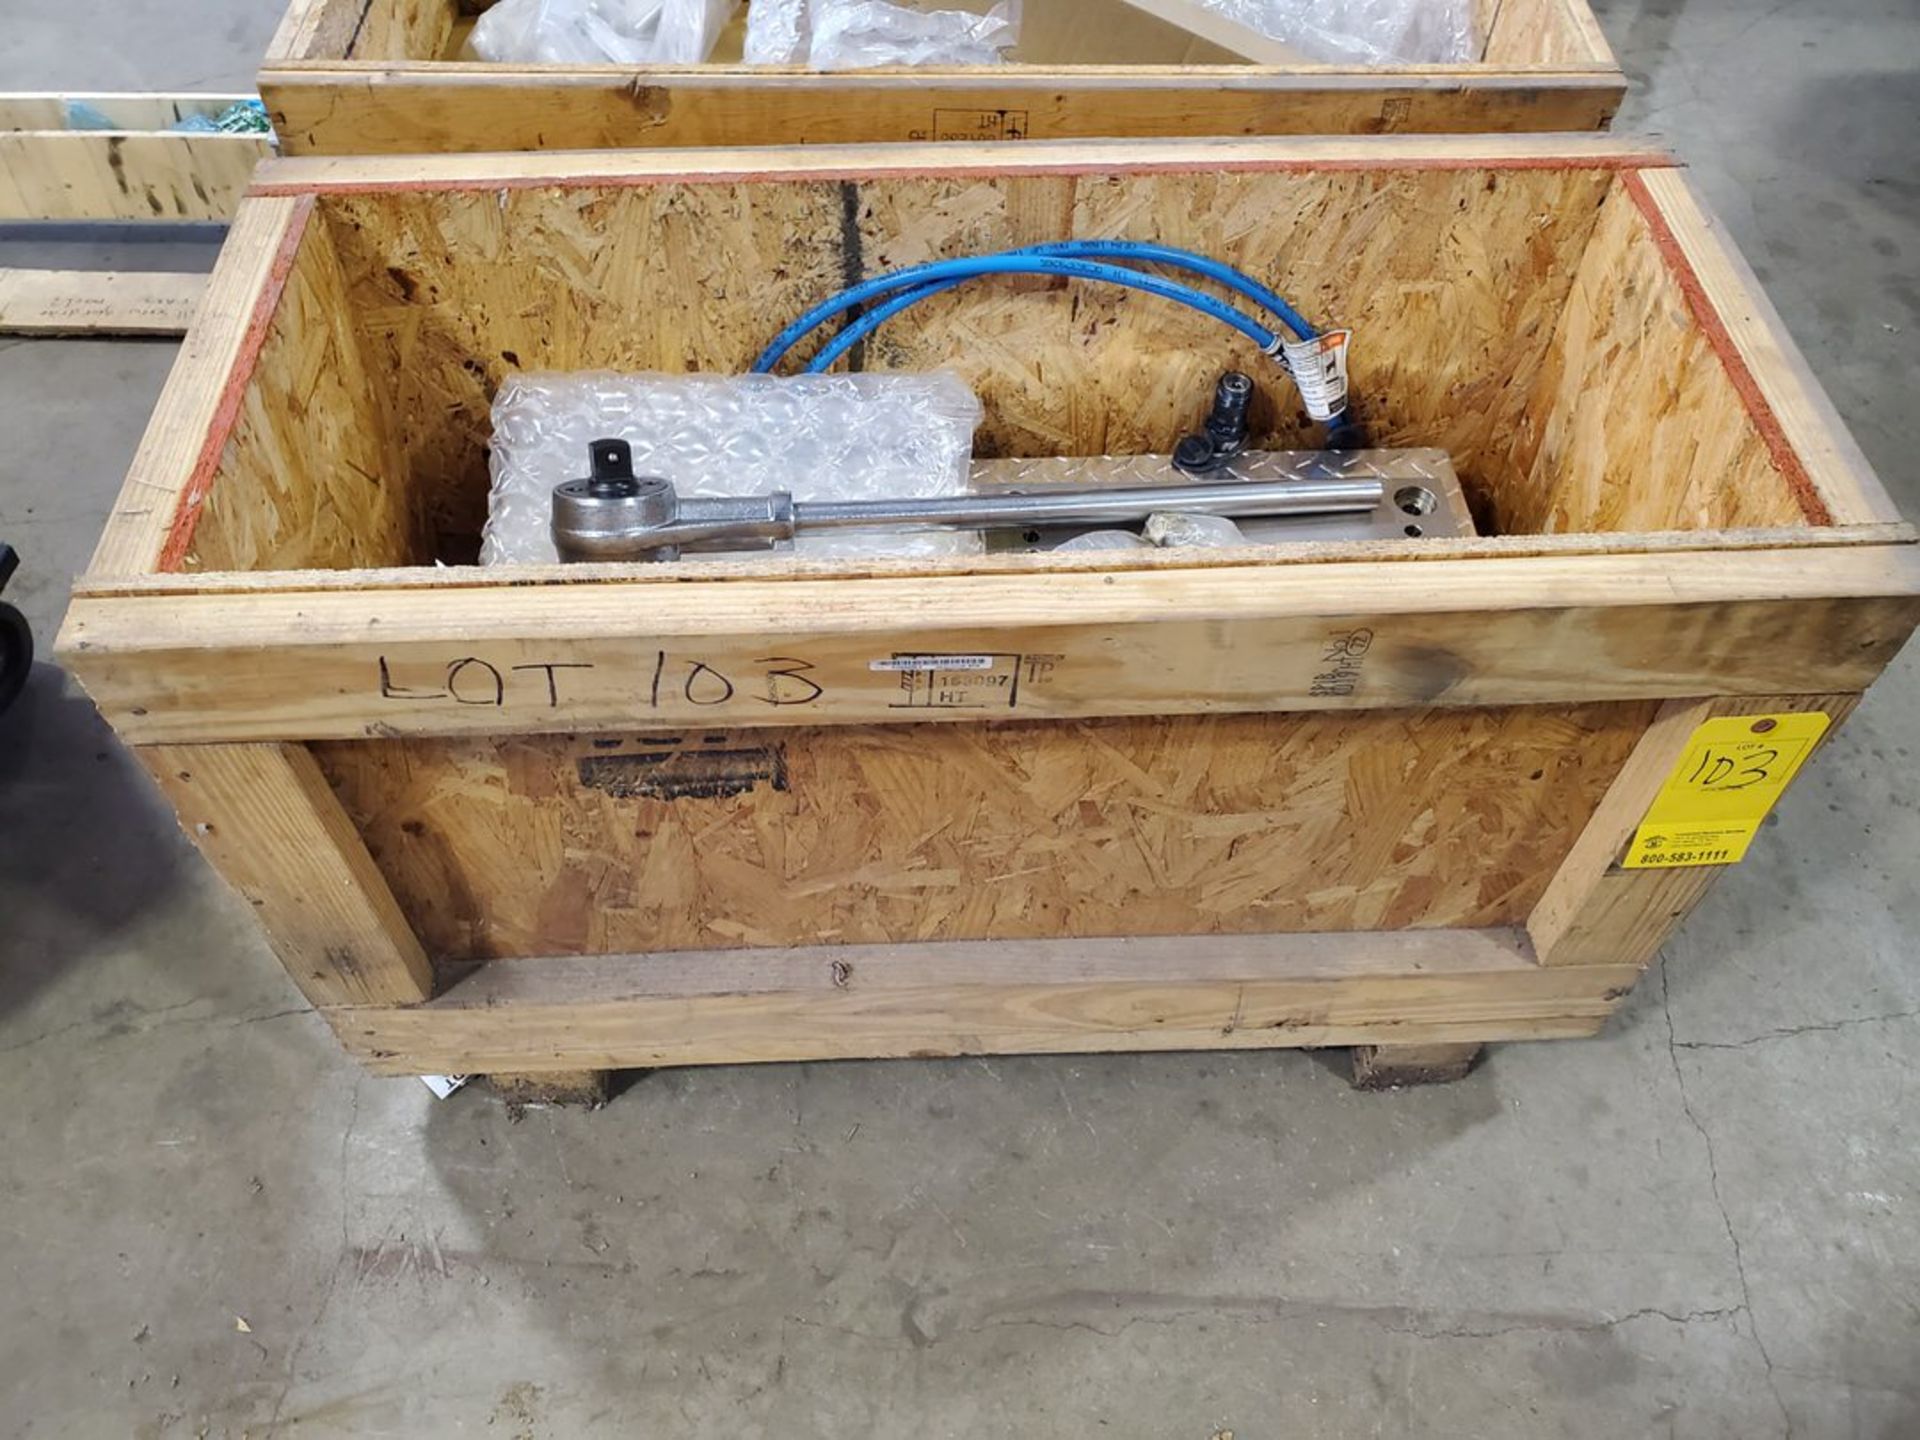 Flow 93K Intensifier Rebuild Tool Kit 1-5/8" Gear Wrench, 3/4" Torque Wrench, Tool Box, Fittings,